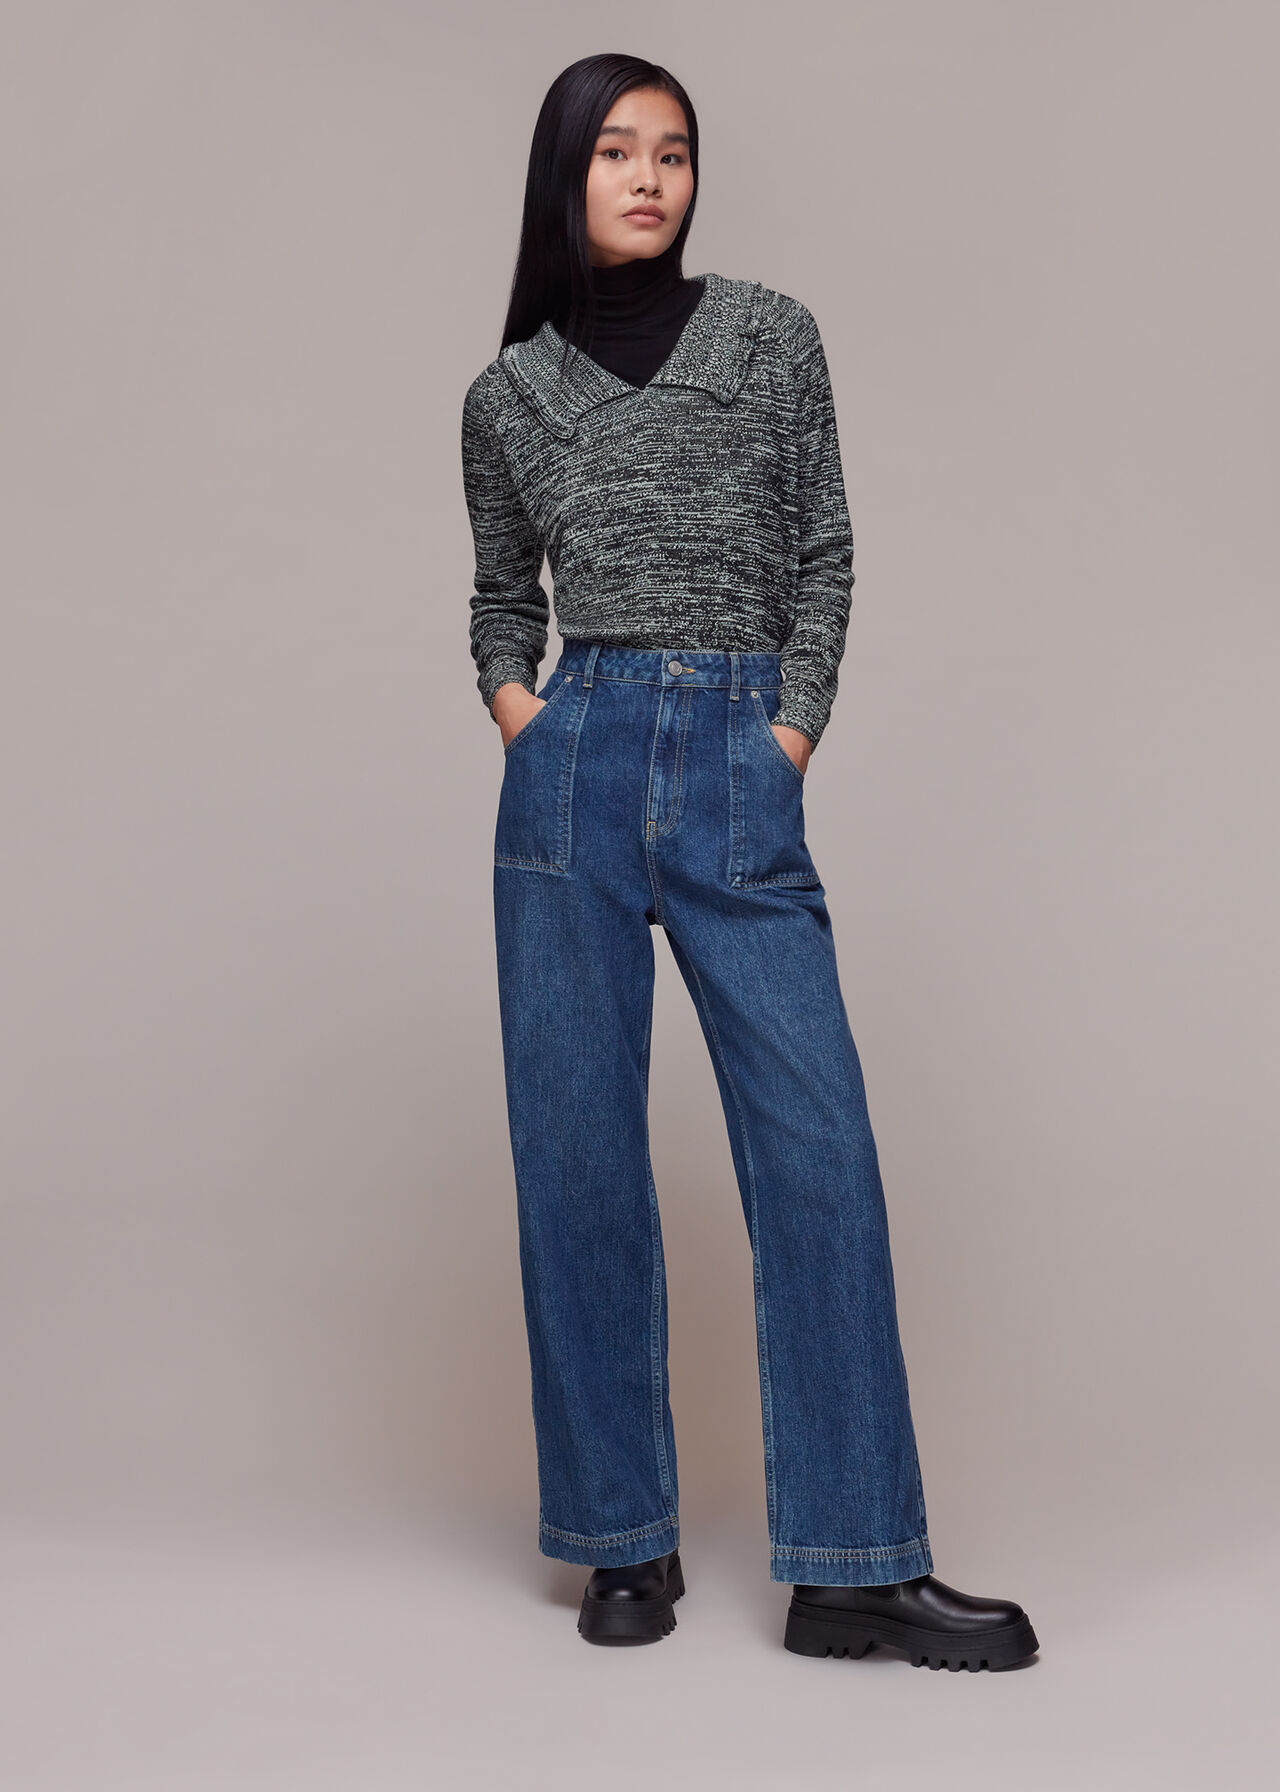 Black/Multi Frill Collar Sweater | WHISTLES